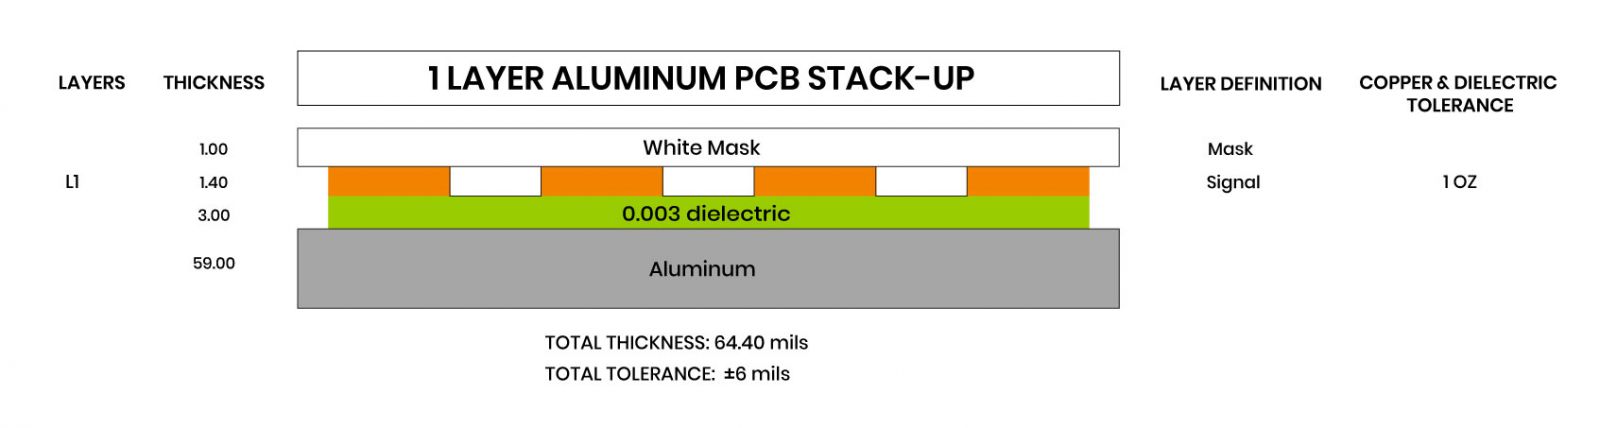 1 Layer Aluminum PCB Stack-Up